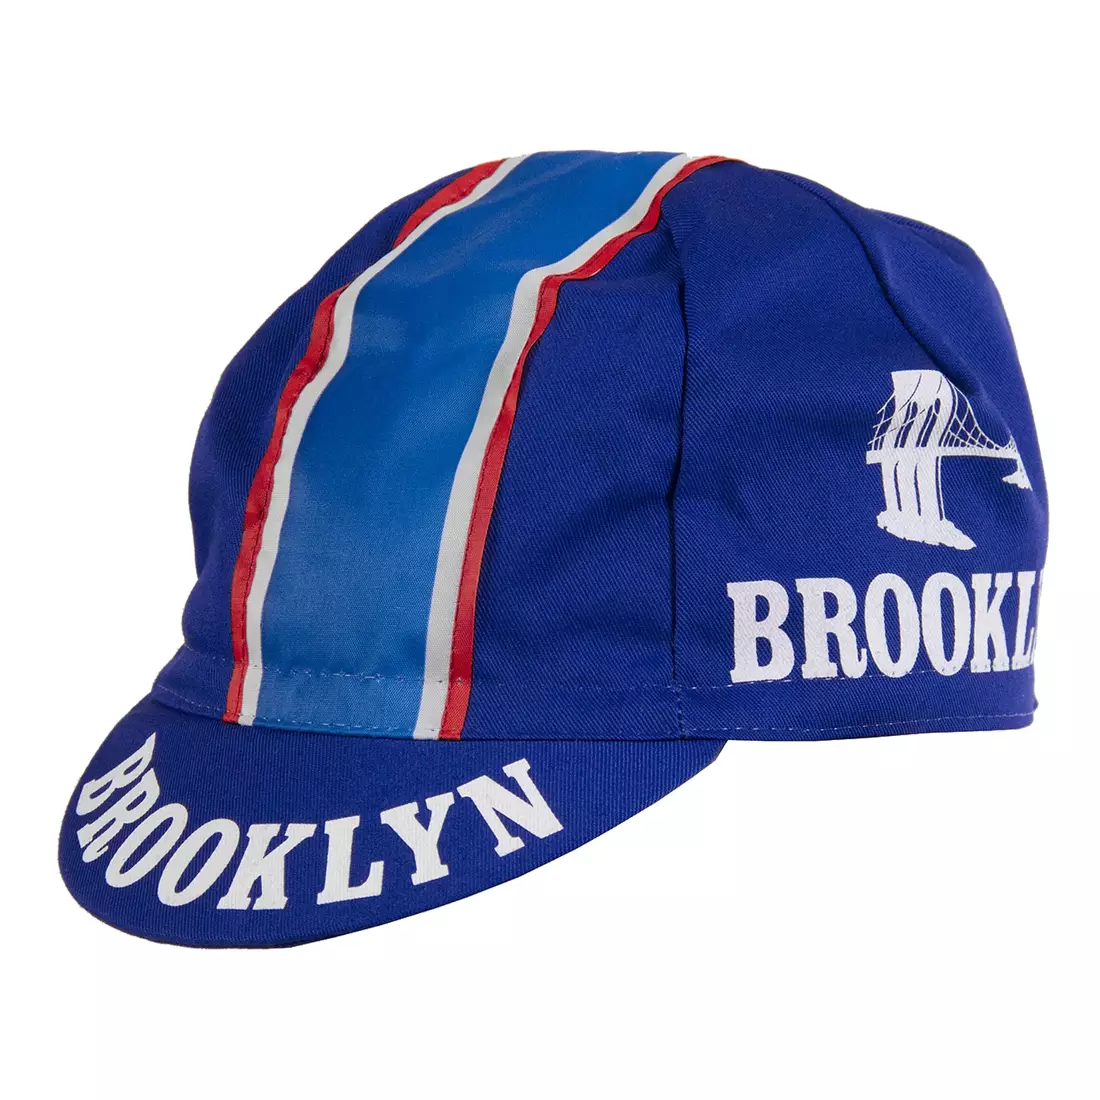 GIORDANA SS18 cycling cap - Brooklyn - Traditional GI-COCA-TEAM-BROK one size